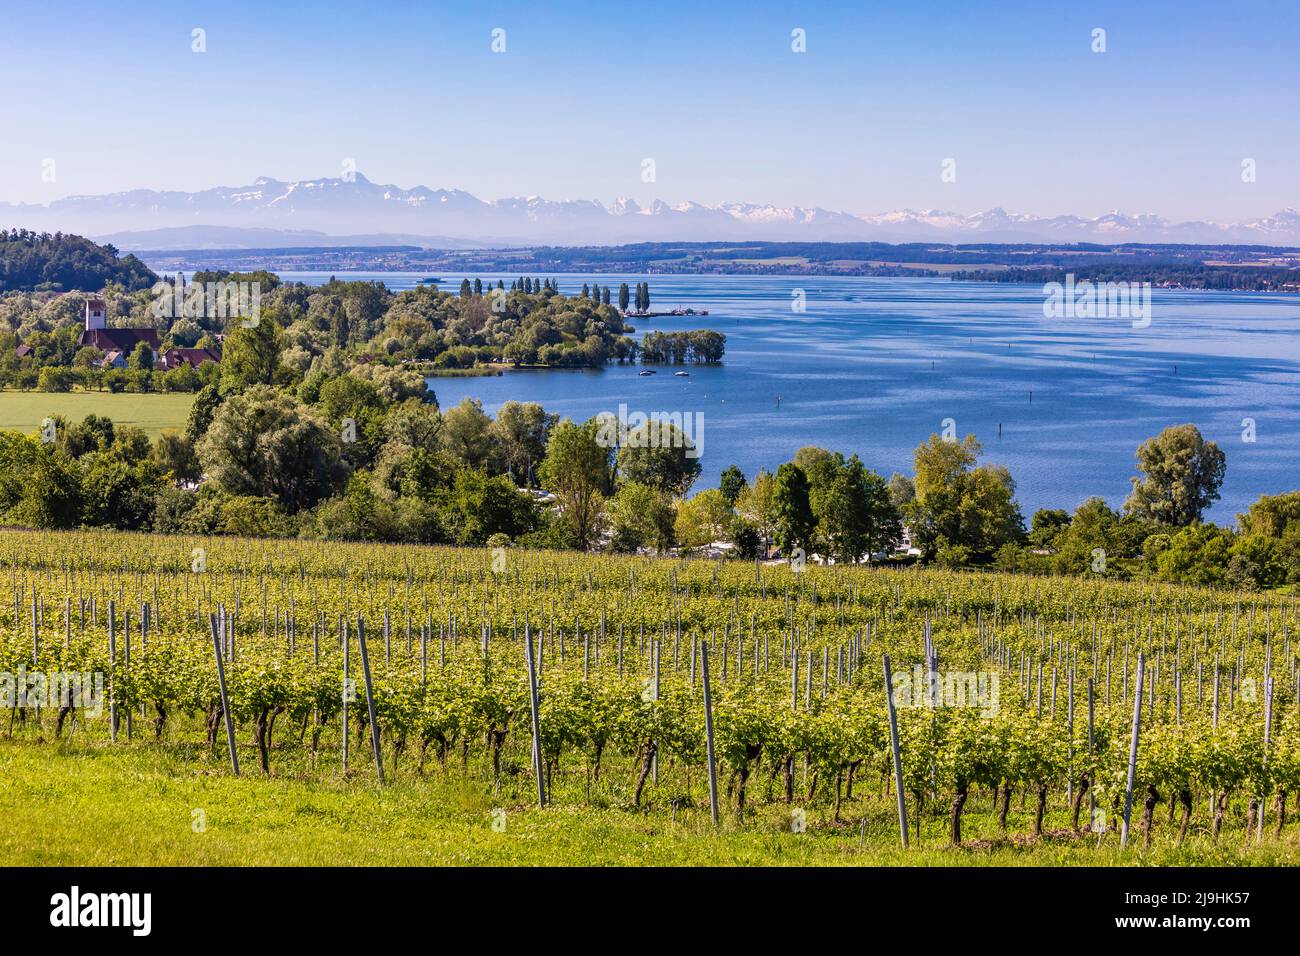 Germany, Baden-Wurttemberg, Unteruhldingen, Green vineyard in summer with Lake Constance in background Stock Photo